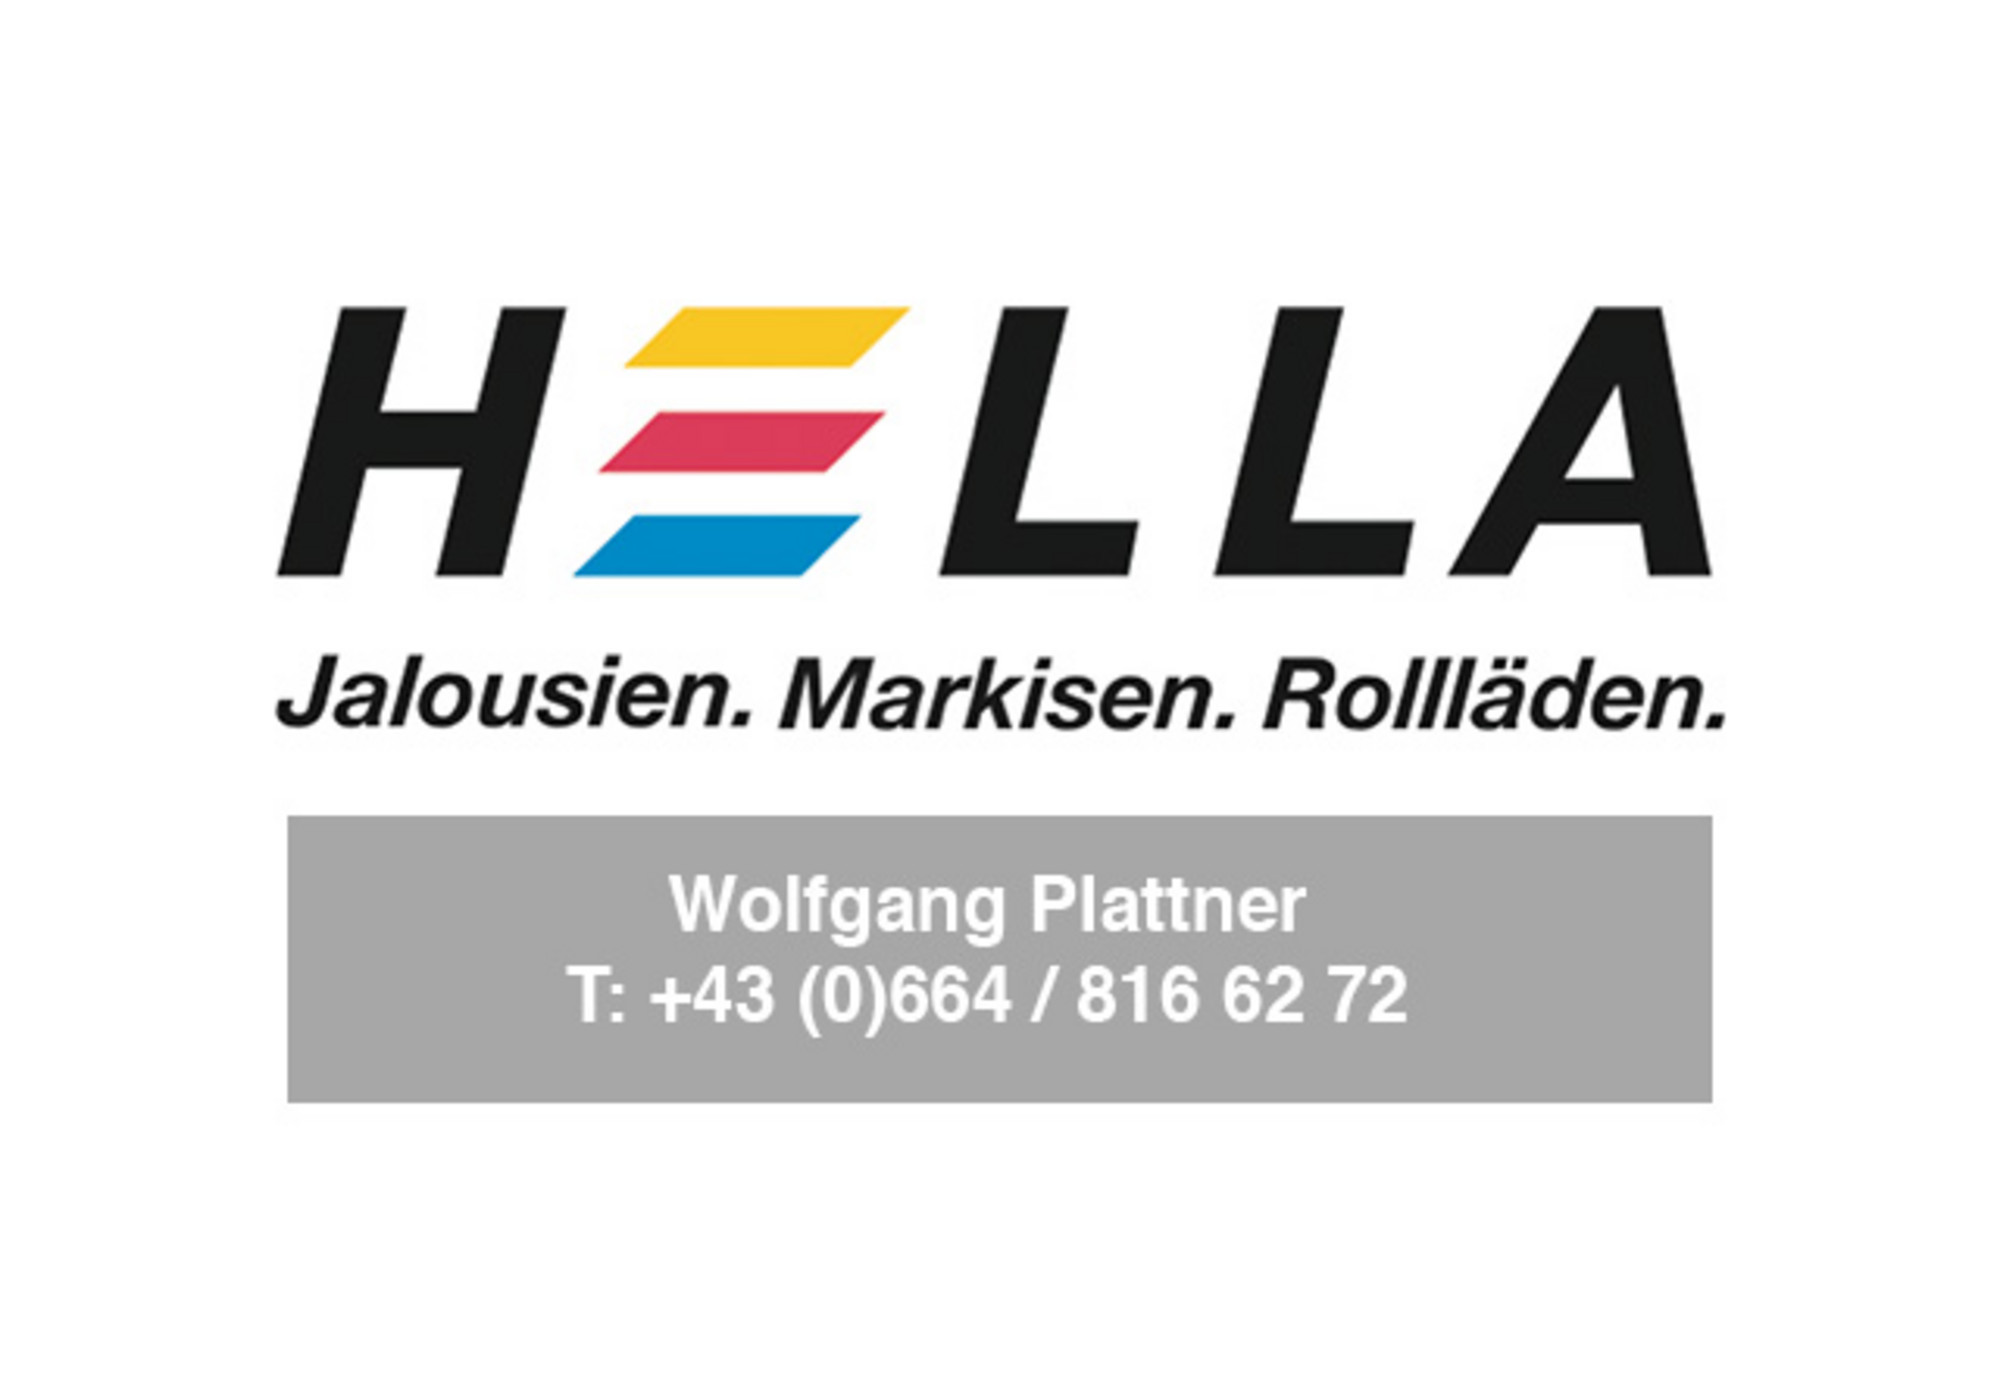 HELLA Markisen - Wolfgang Plattner